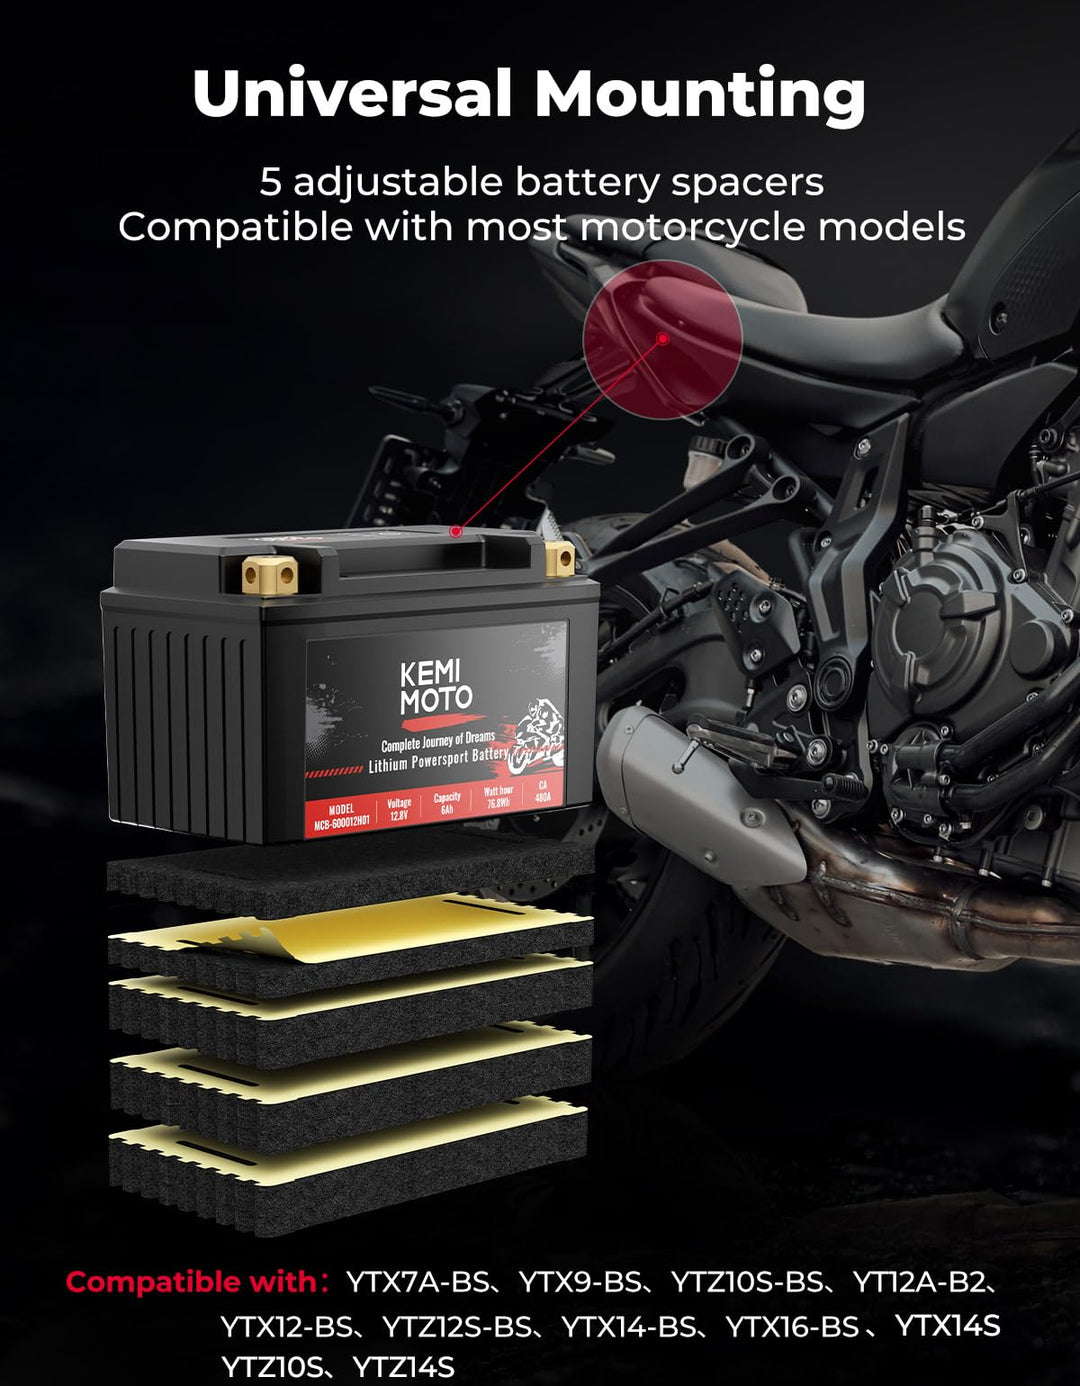 LiFePO4 12v 6Ah Lithium Battery for Motorcycle/ Lawn Mower /ATV/ UTV